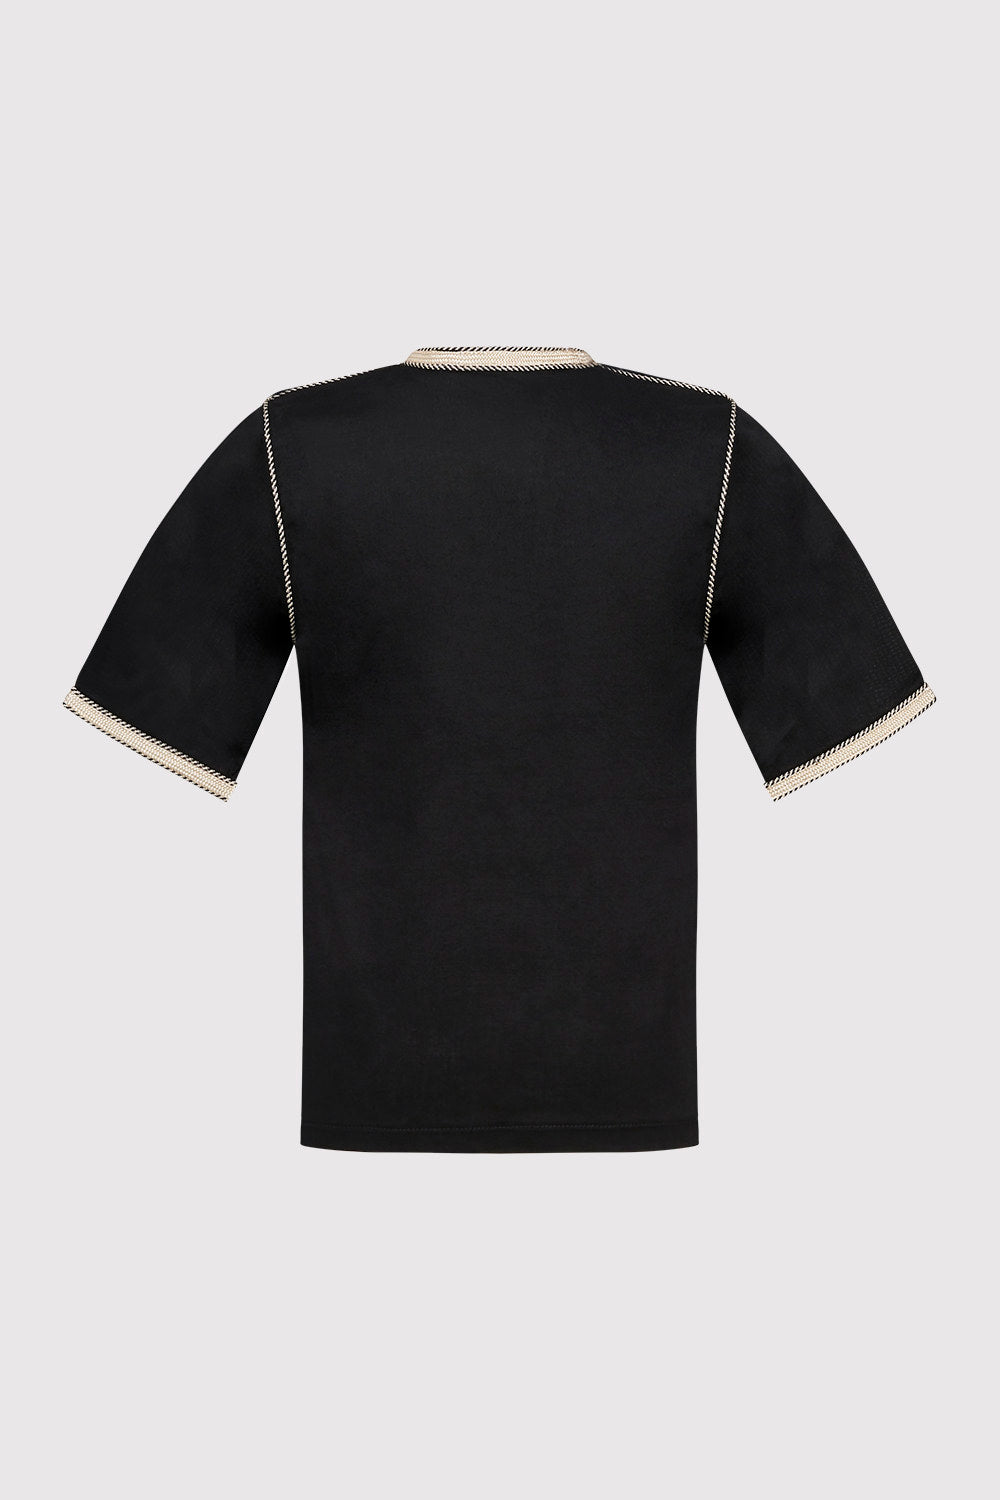 Bilal Boy's Cropped Sleeve Contrast Trim Tunic Top in Black (2-12yrs)